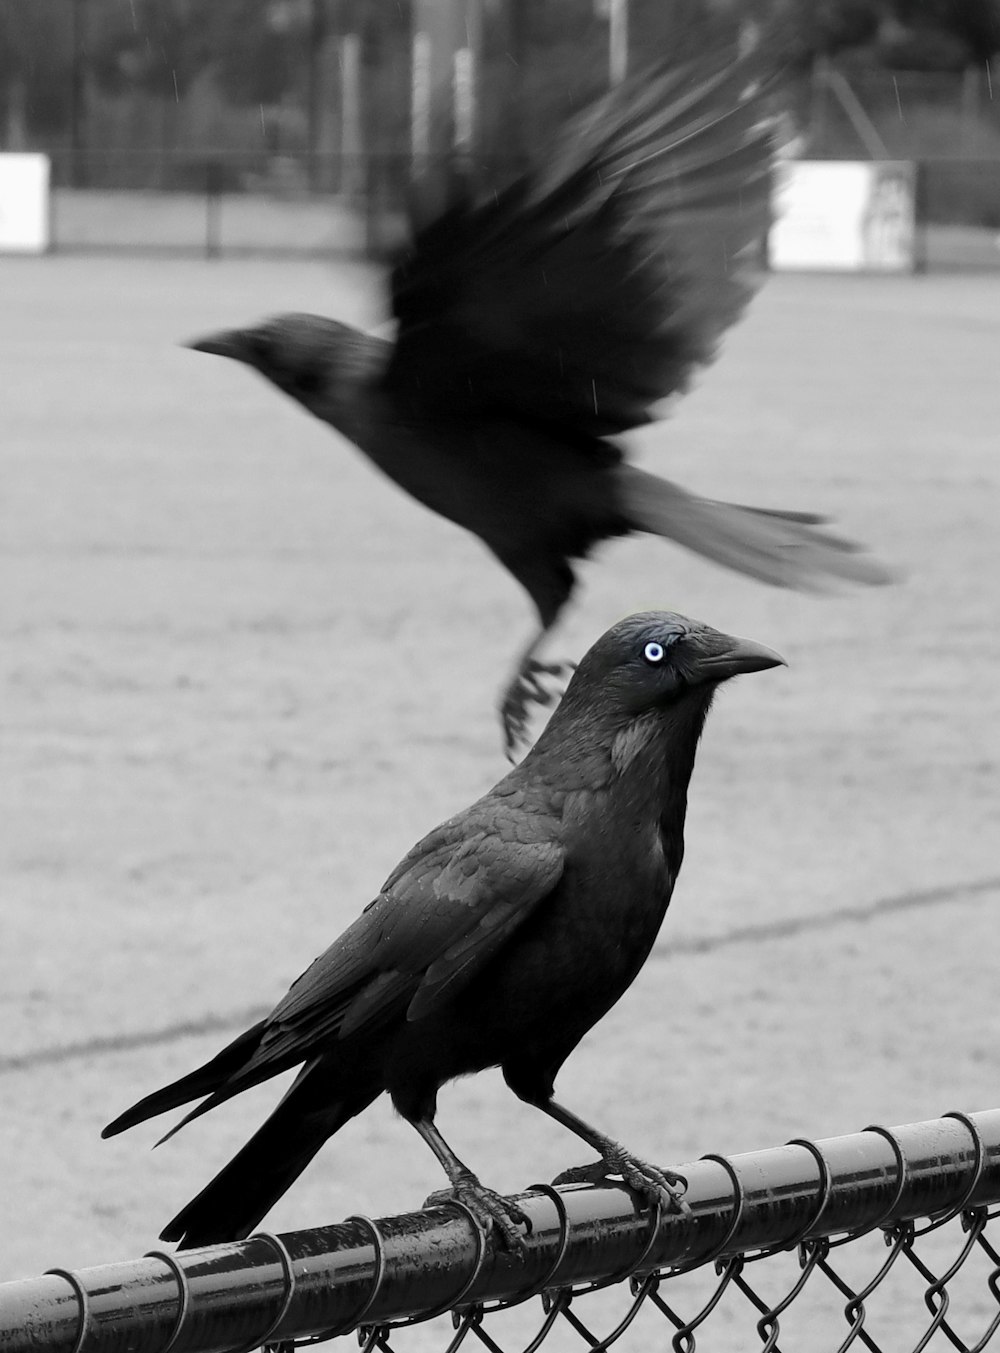 a black bird with blue eyes sitting on a fence